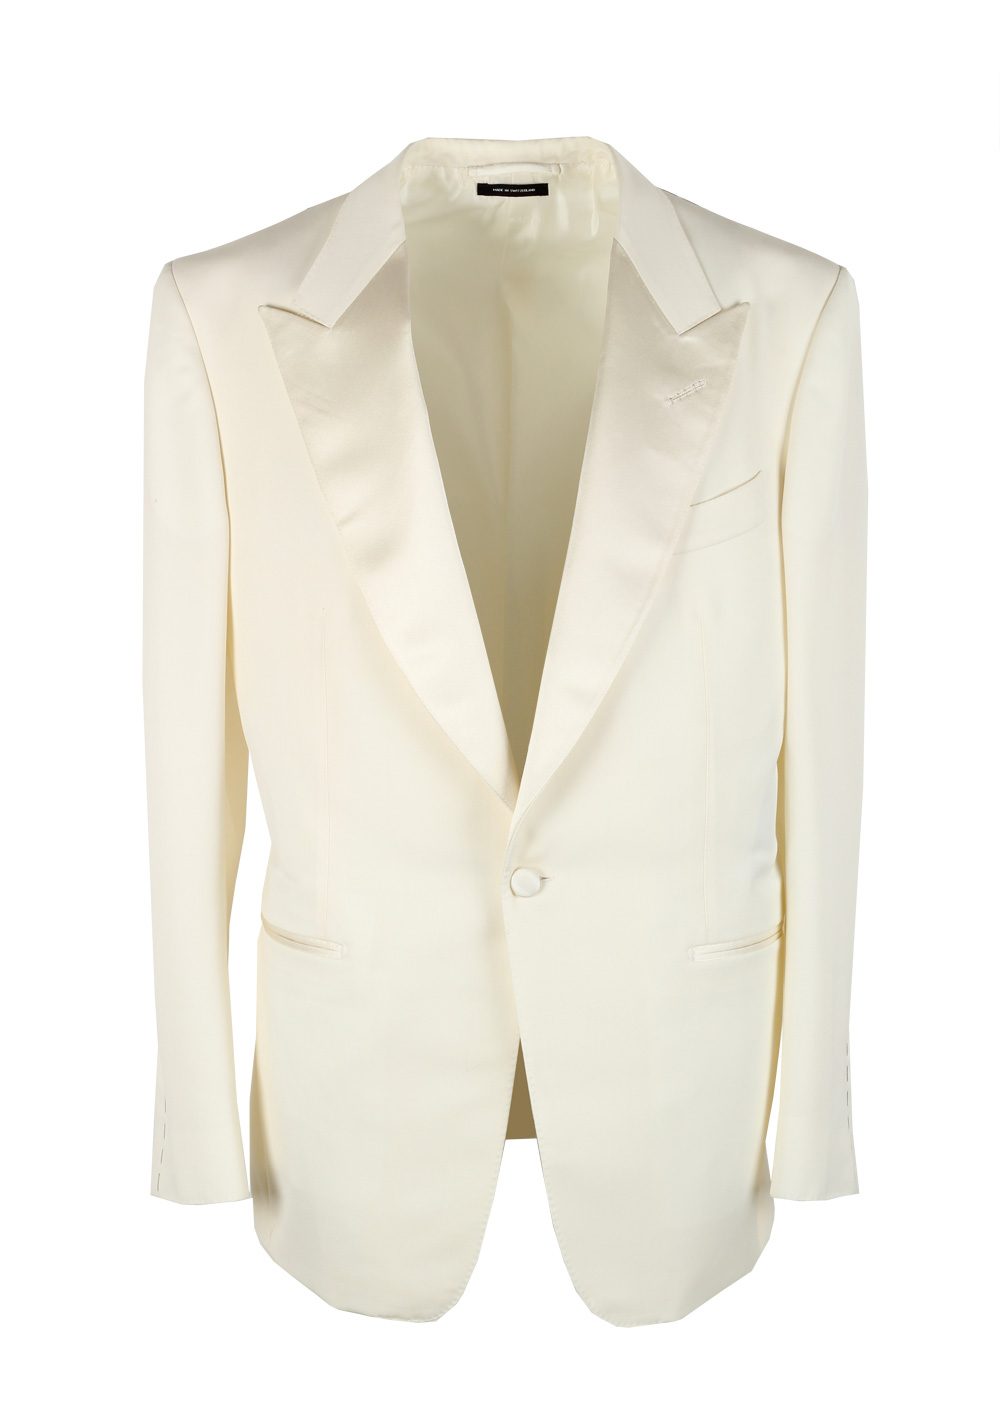 TOM FORD Windsor Ivory Sport Coat Tuxedo Dinner Jacket Size 52 / 42R U ...